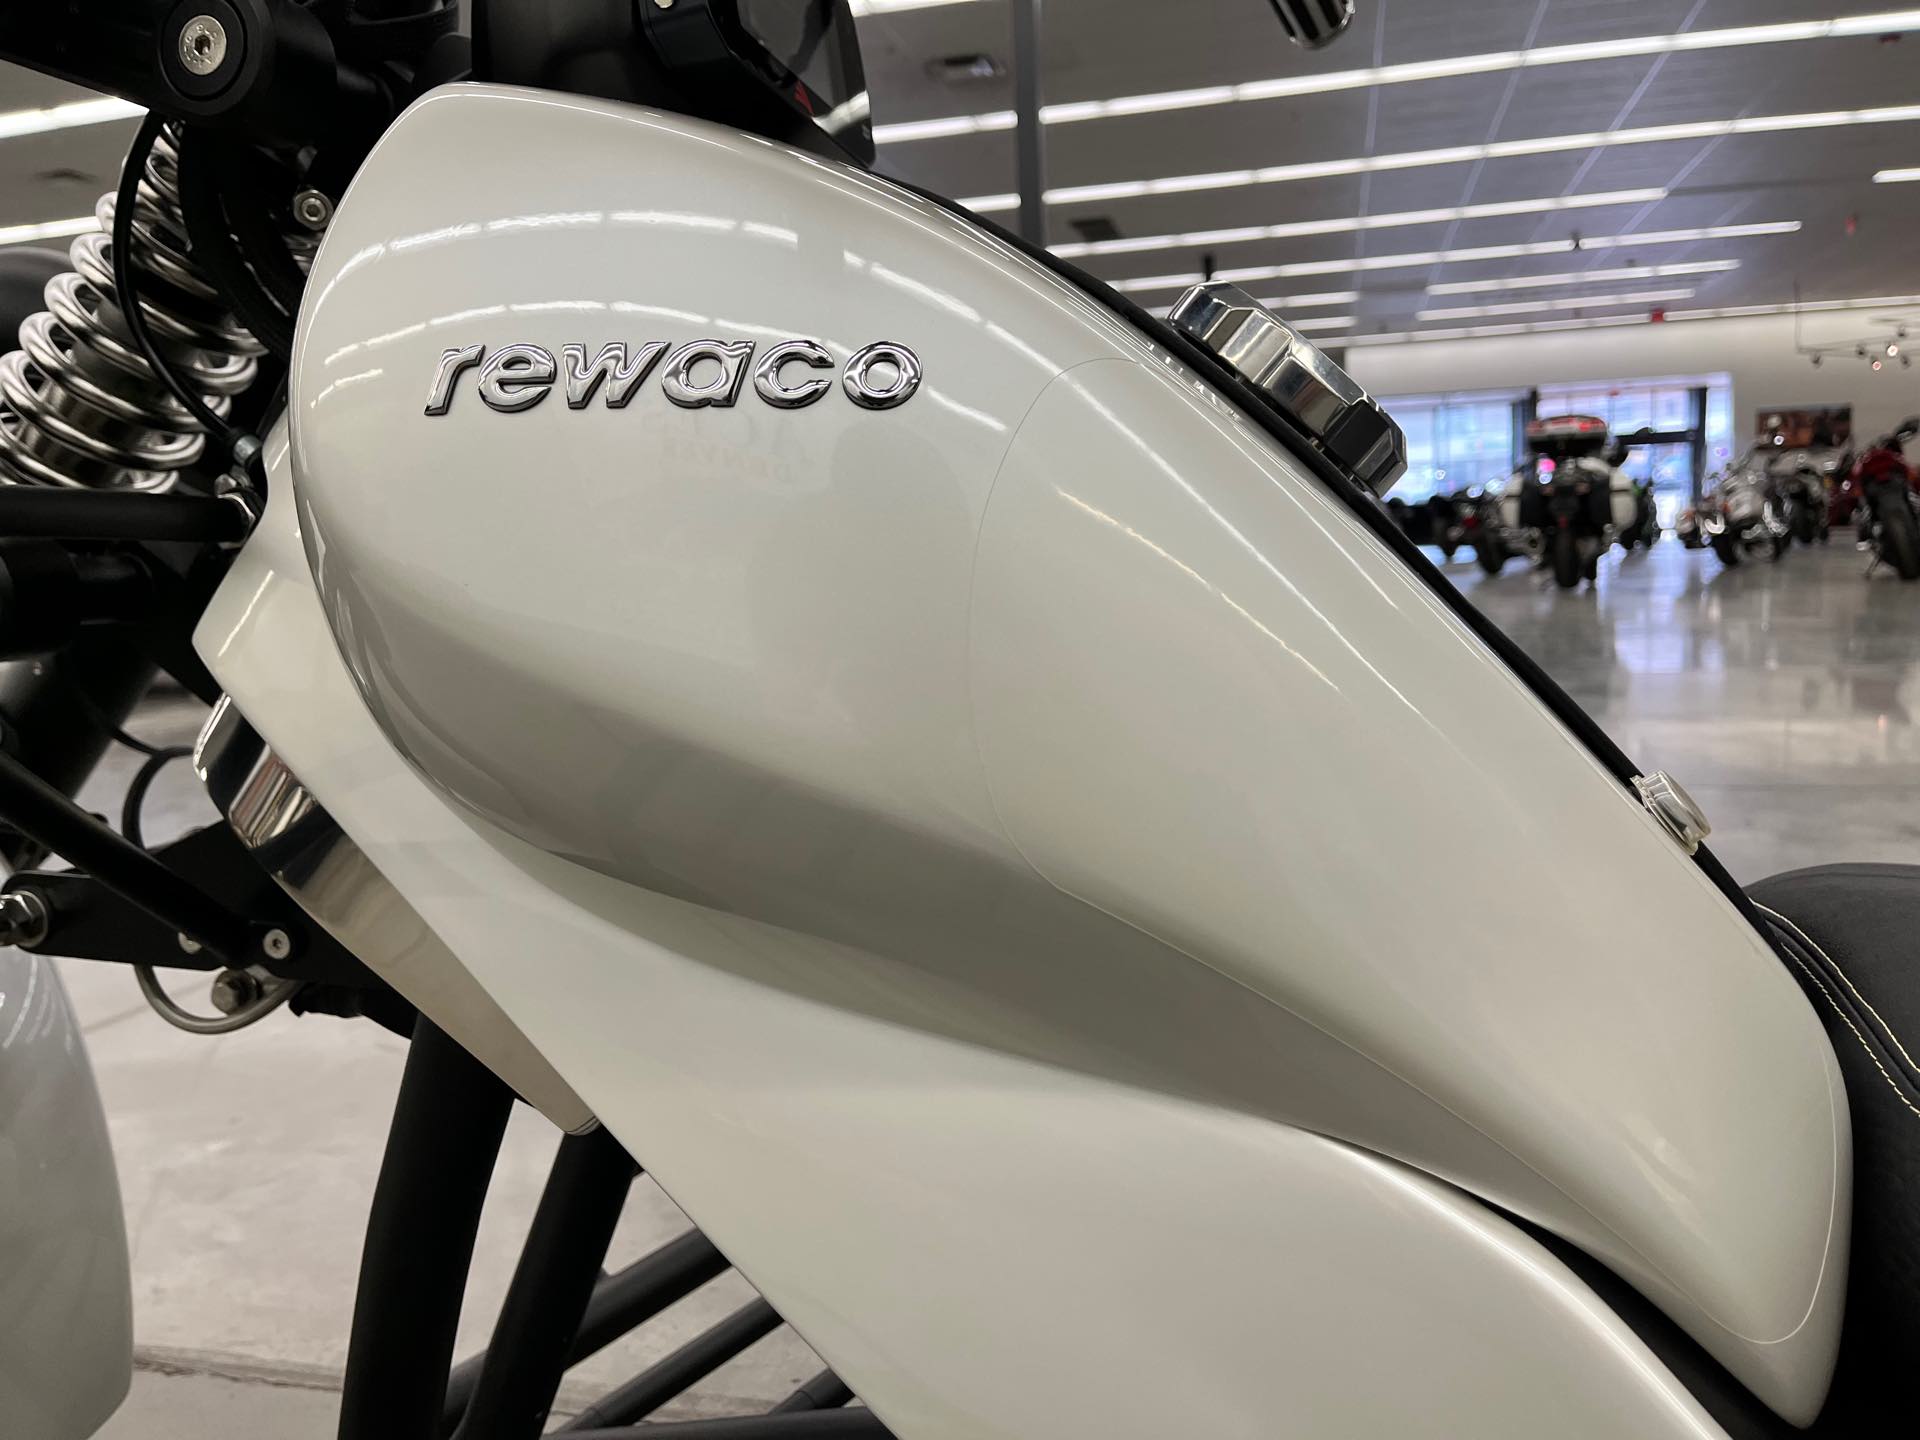 2022 REWACO ST-3 Turbo w Blackline pkg at Aces Motorcycles - Denver